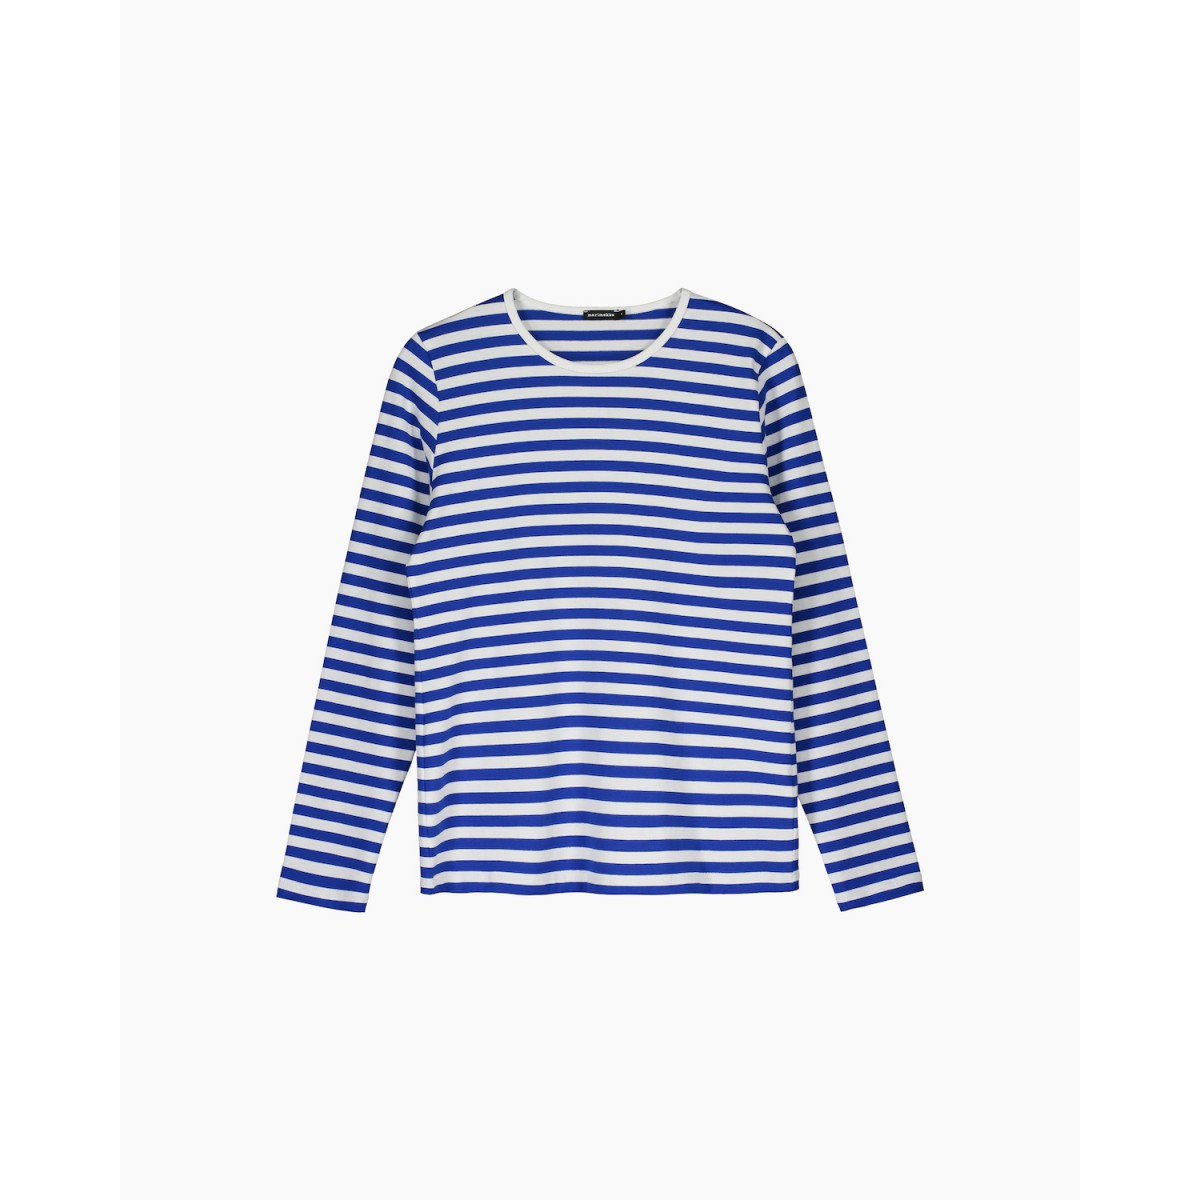 Mari shirt - 070 - Marimekko